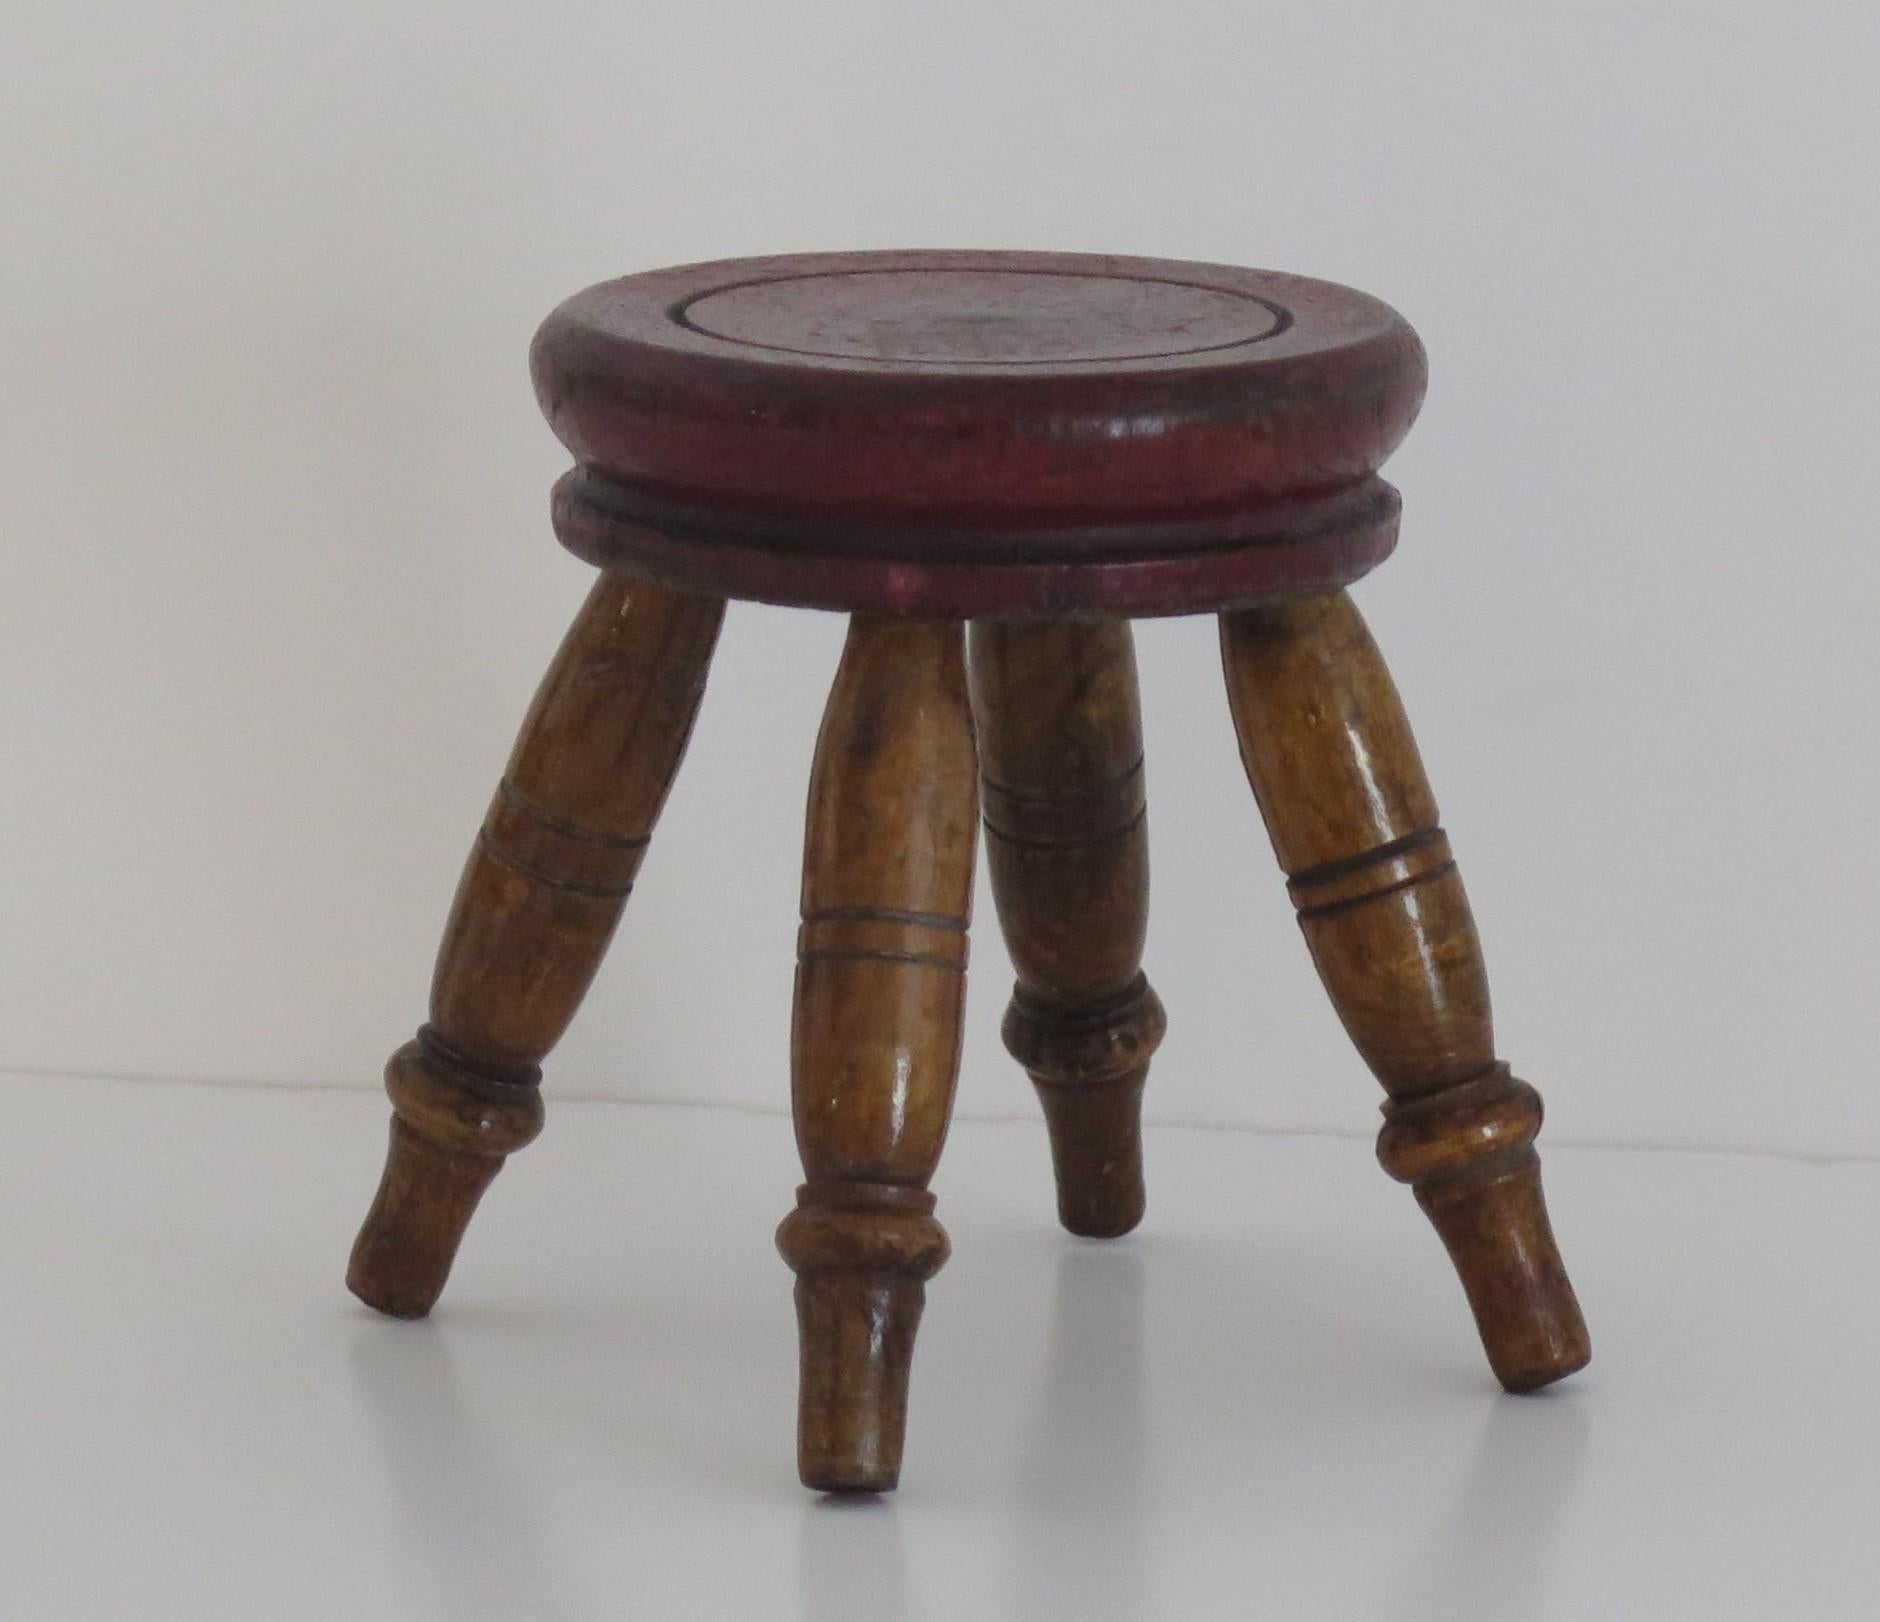 very small stool